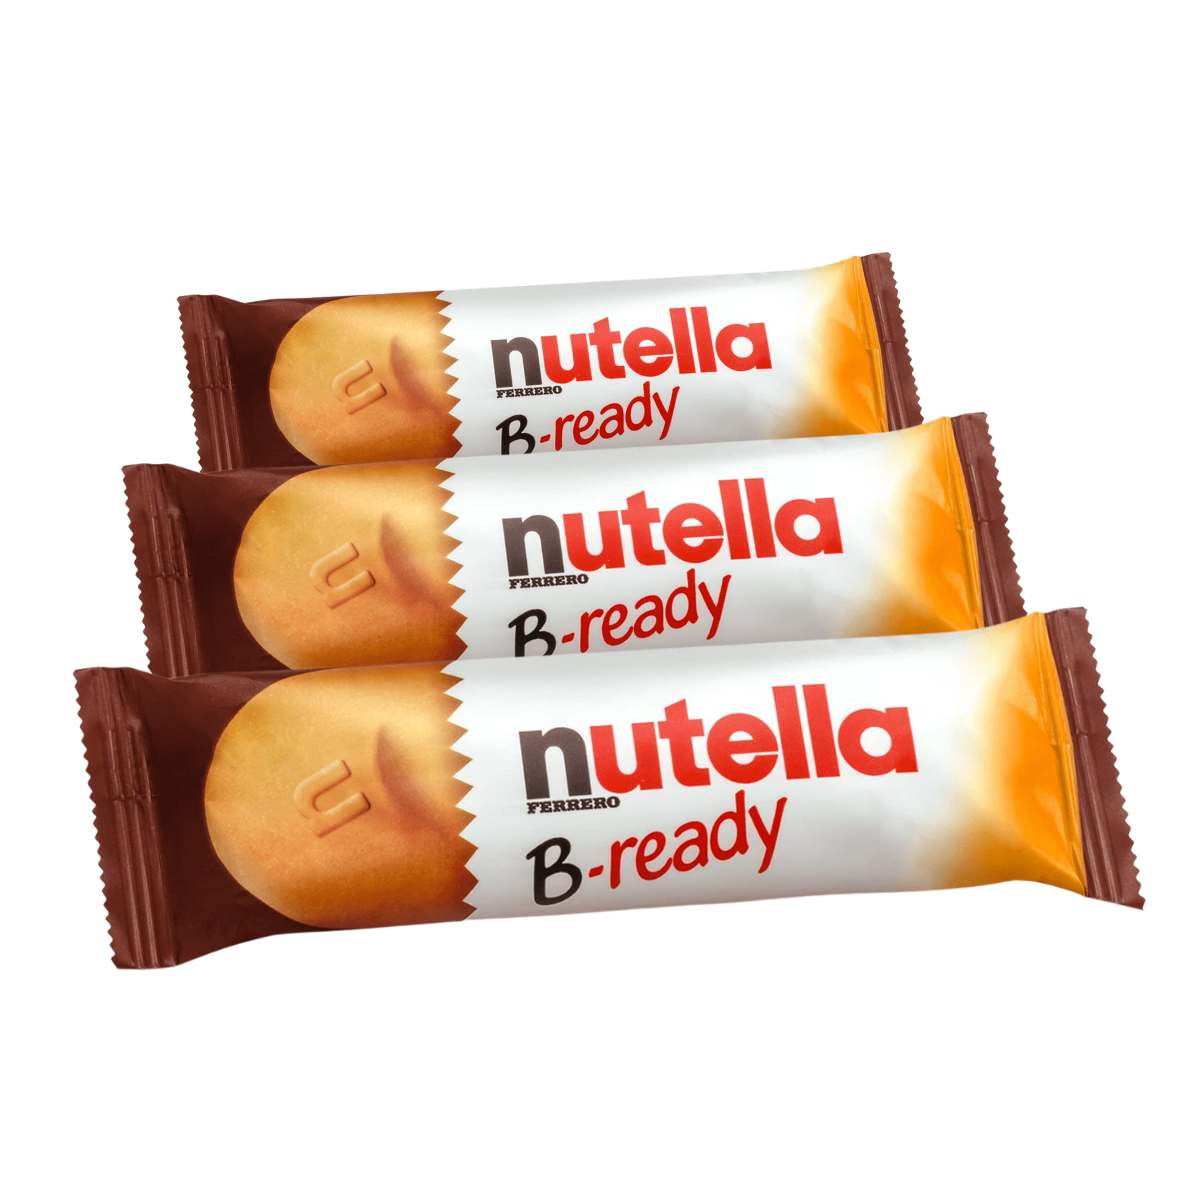 Biscoito Nutella B-ready, 3 Pacotes de 22g